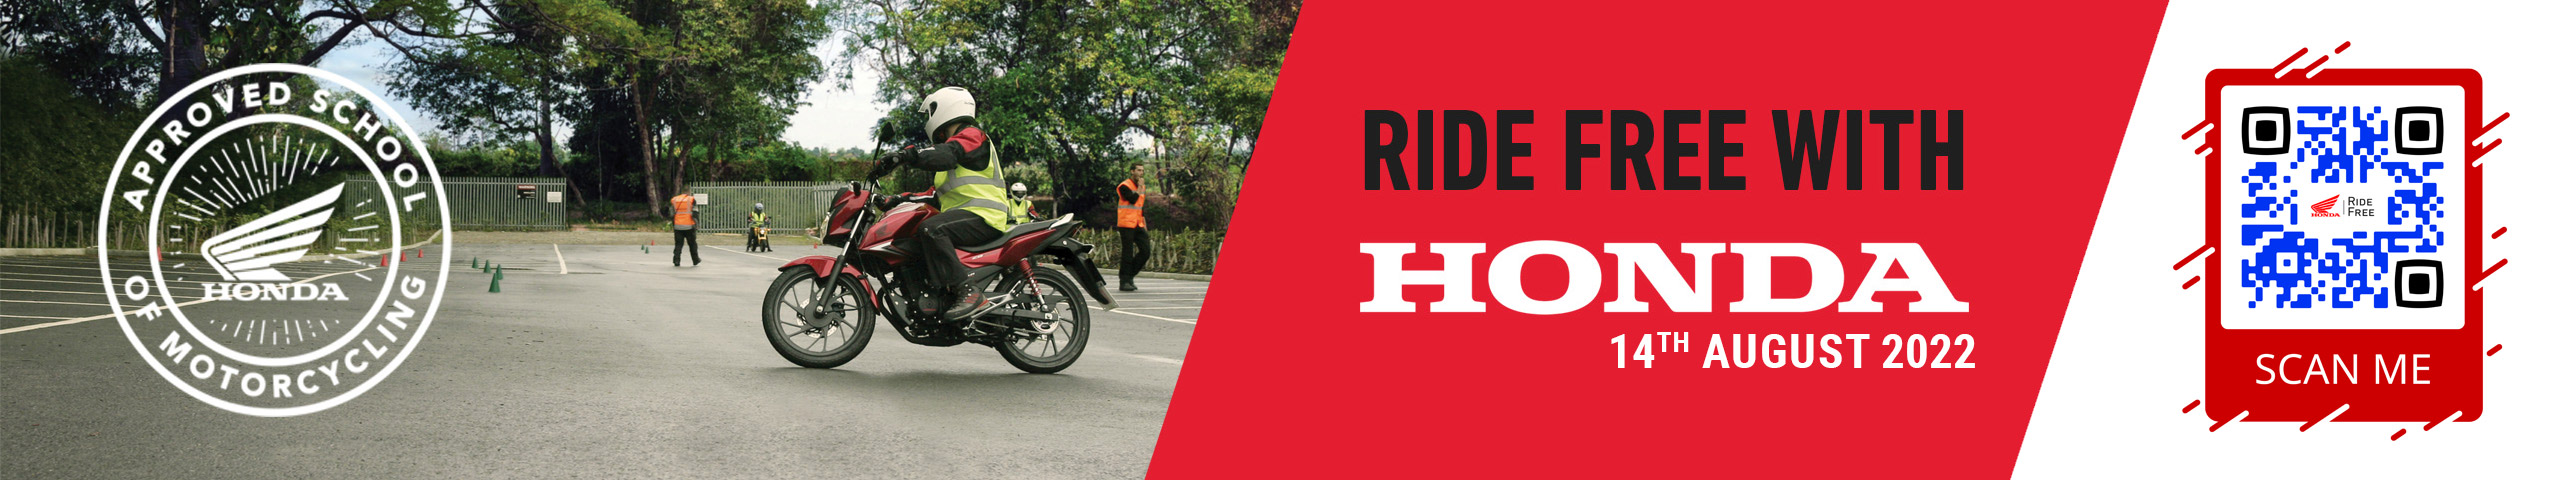 Ride Free with Honda